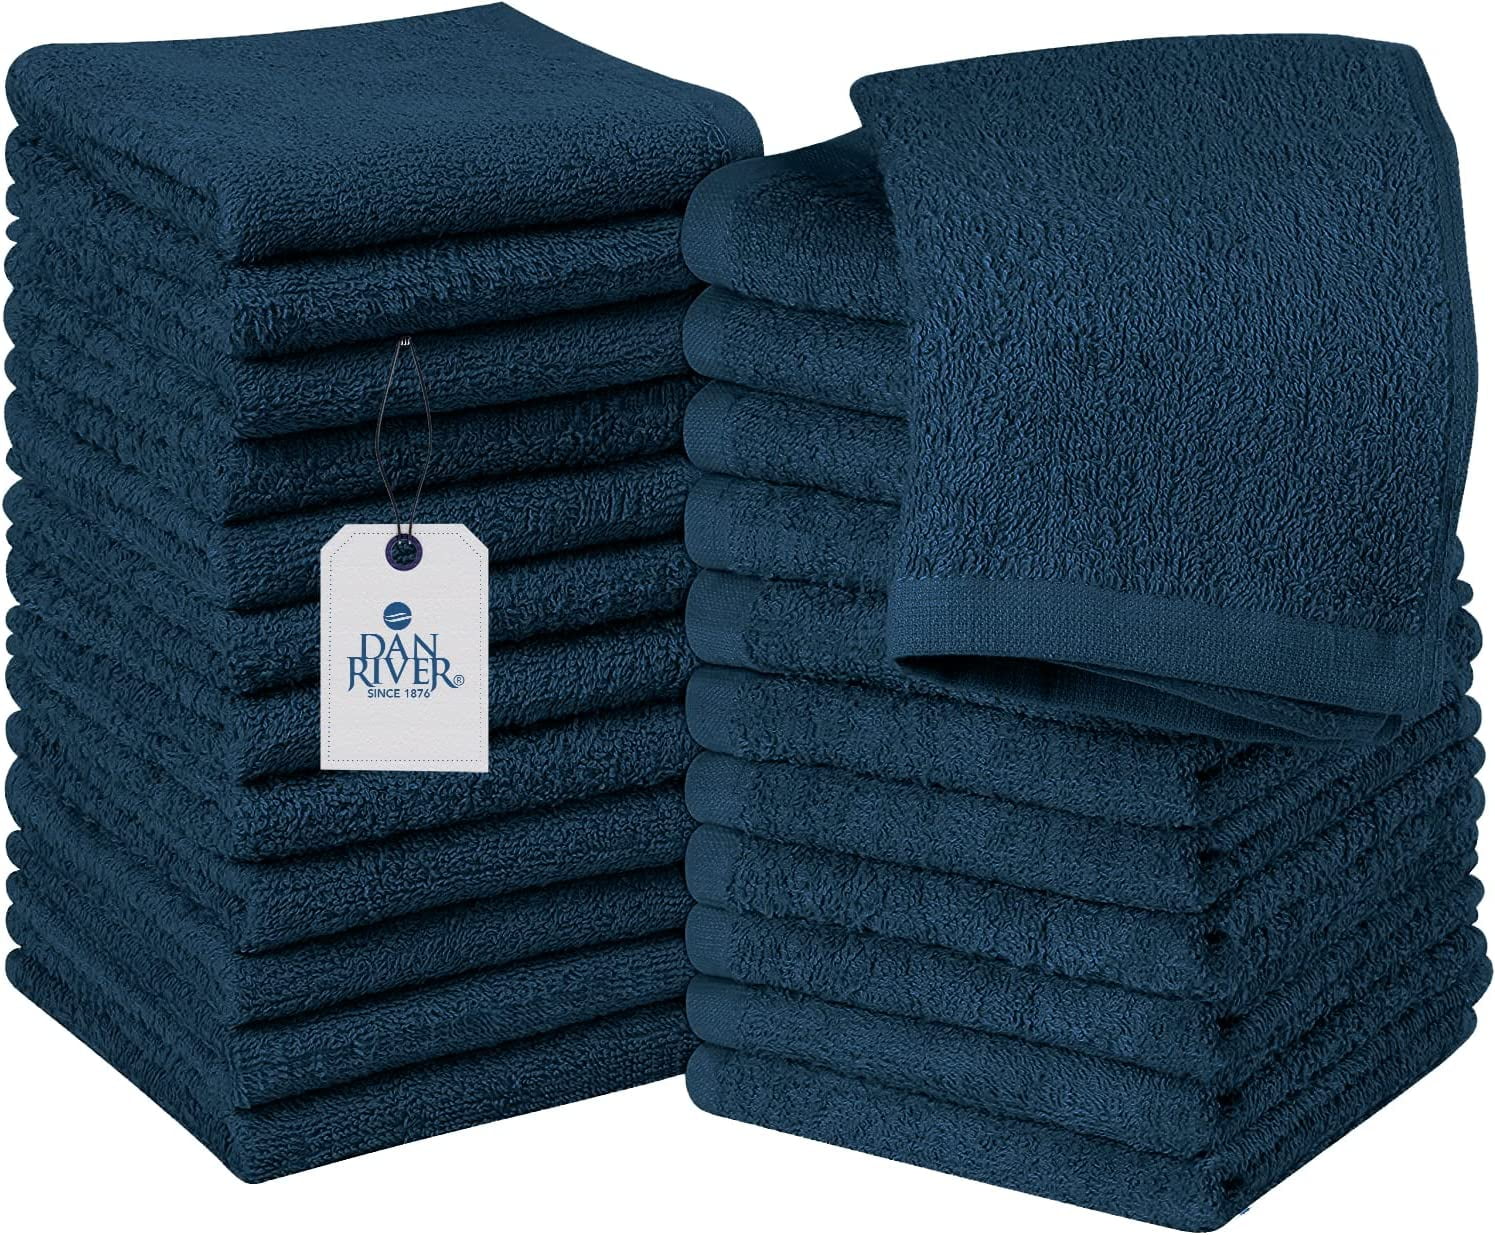 Mellanni Washcloth 12 inchx12 inch, 100% Terry Cotton, 12 Pack, Navy, Size: 12 x 12, Blue